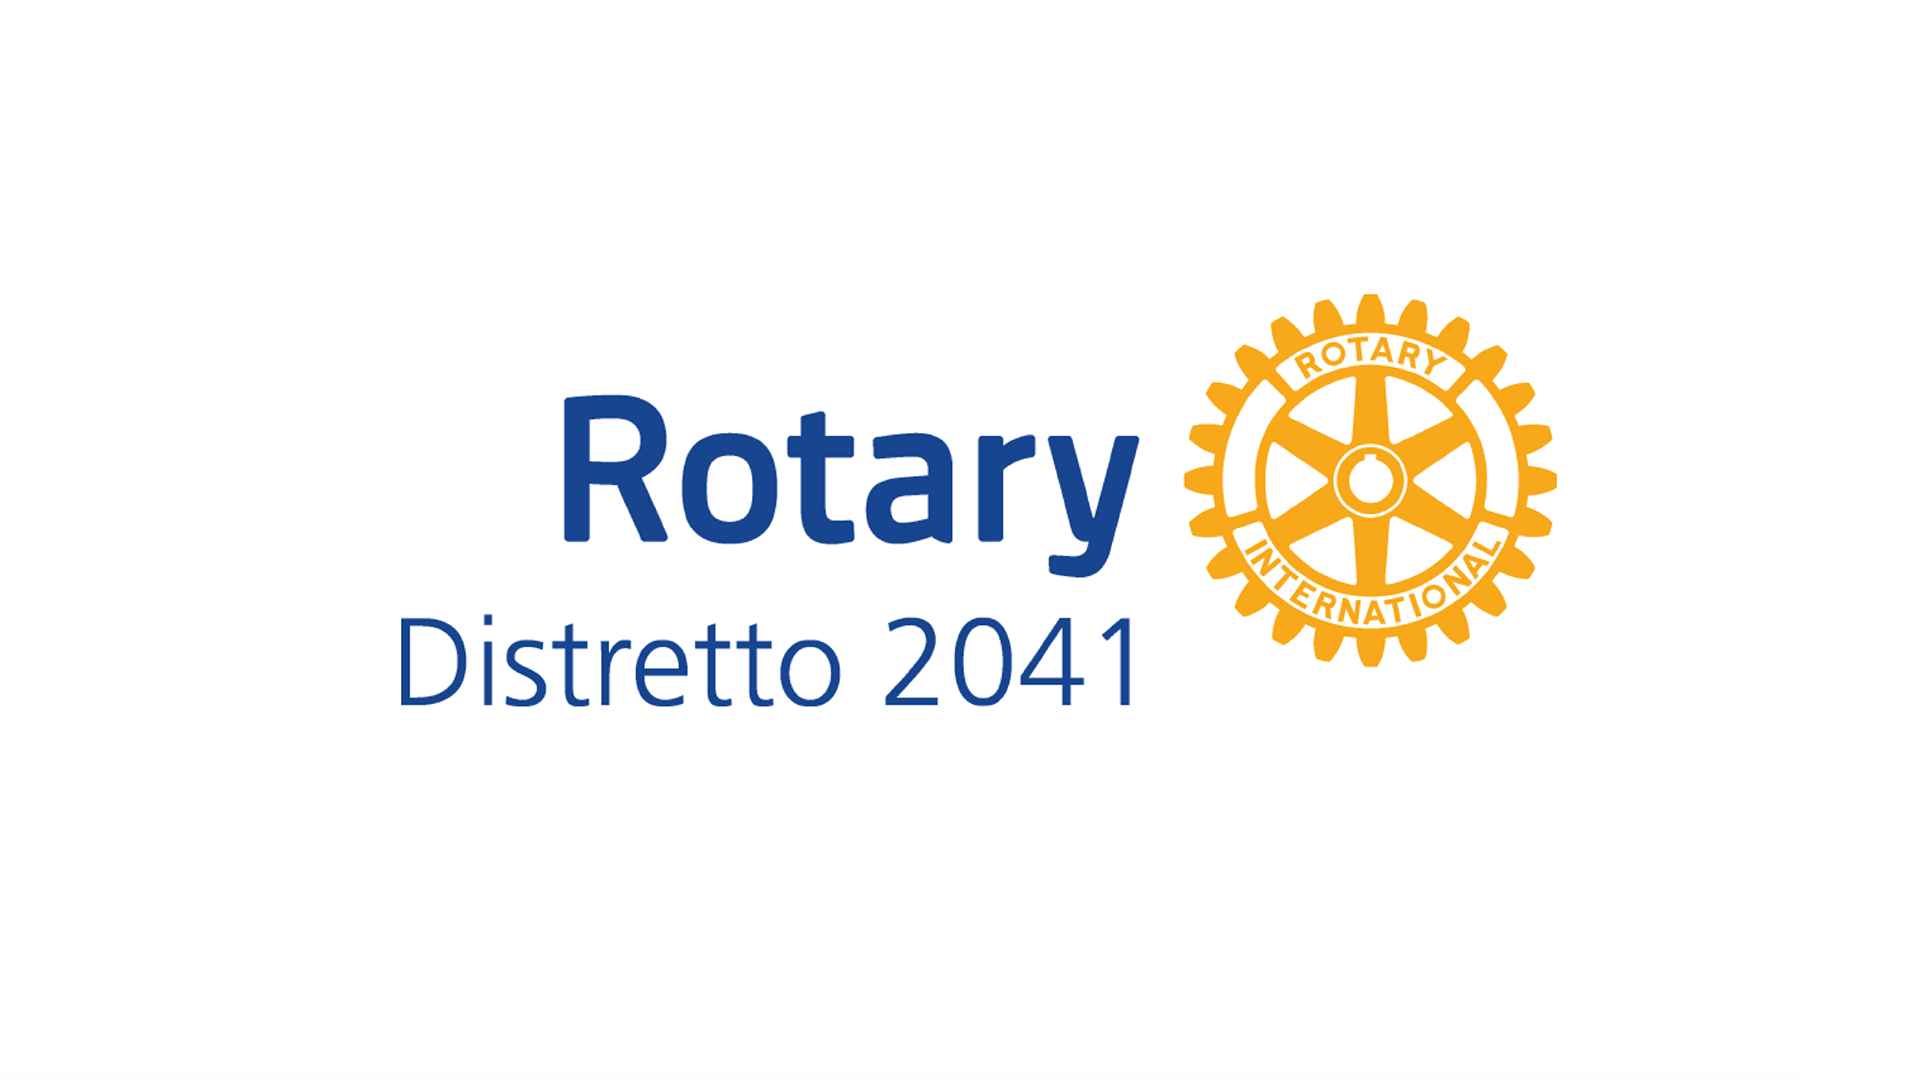 Rotary Distretto 2041 - Rotary International